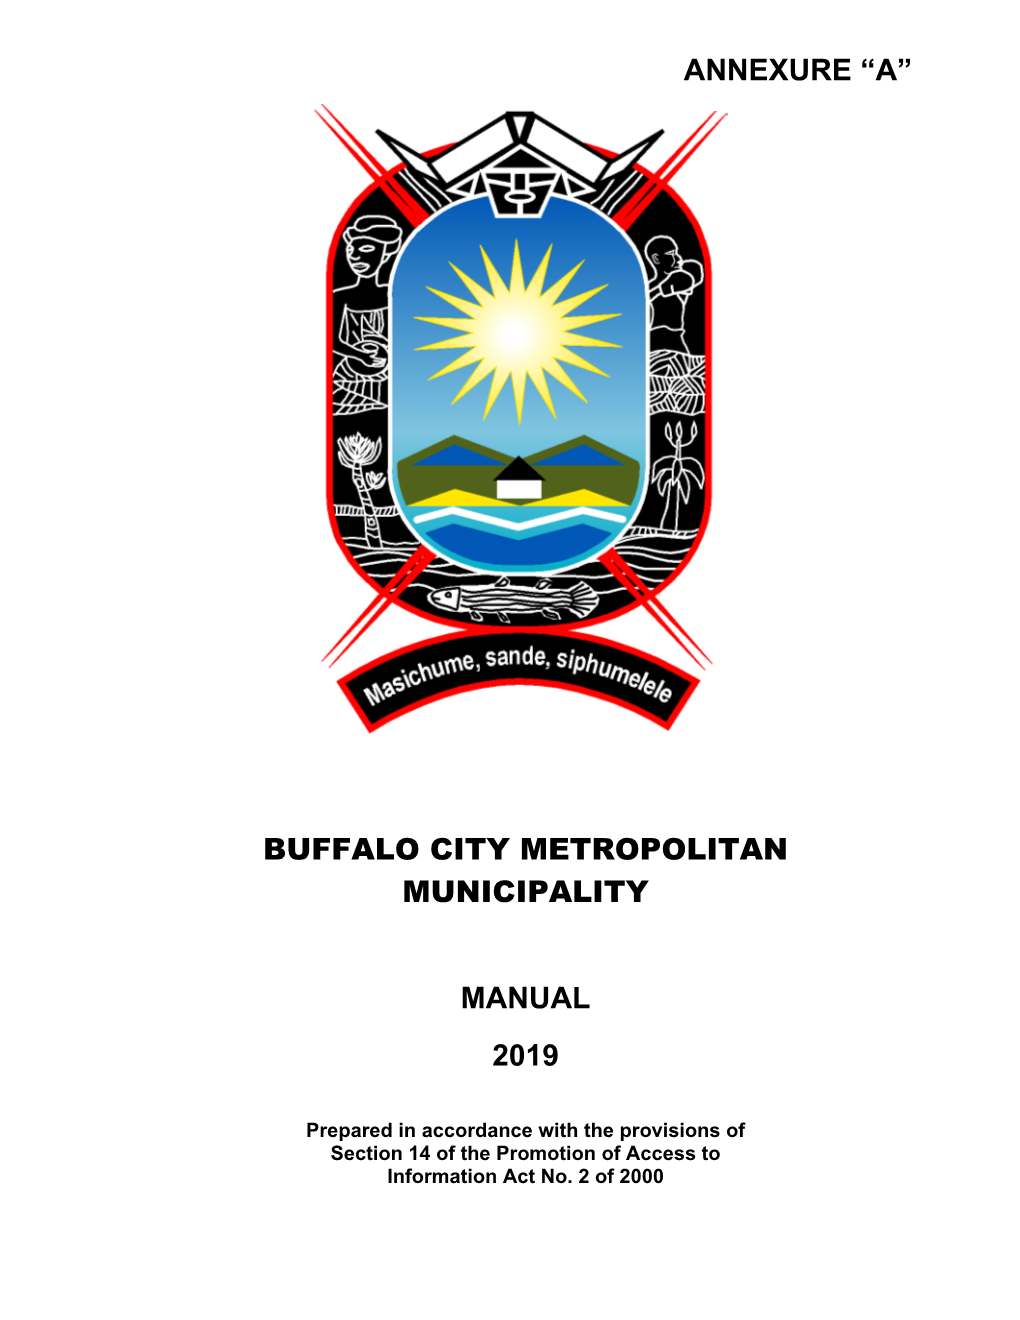 Buffalo City Metropolitan Municipality Manual